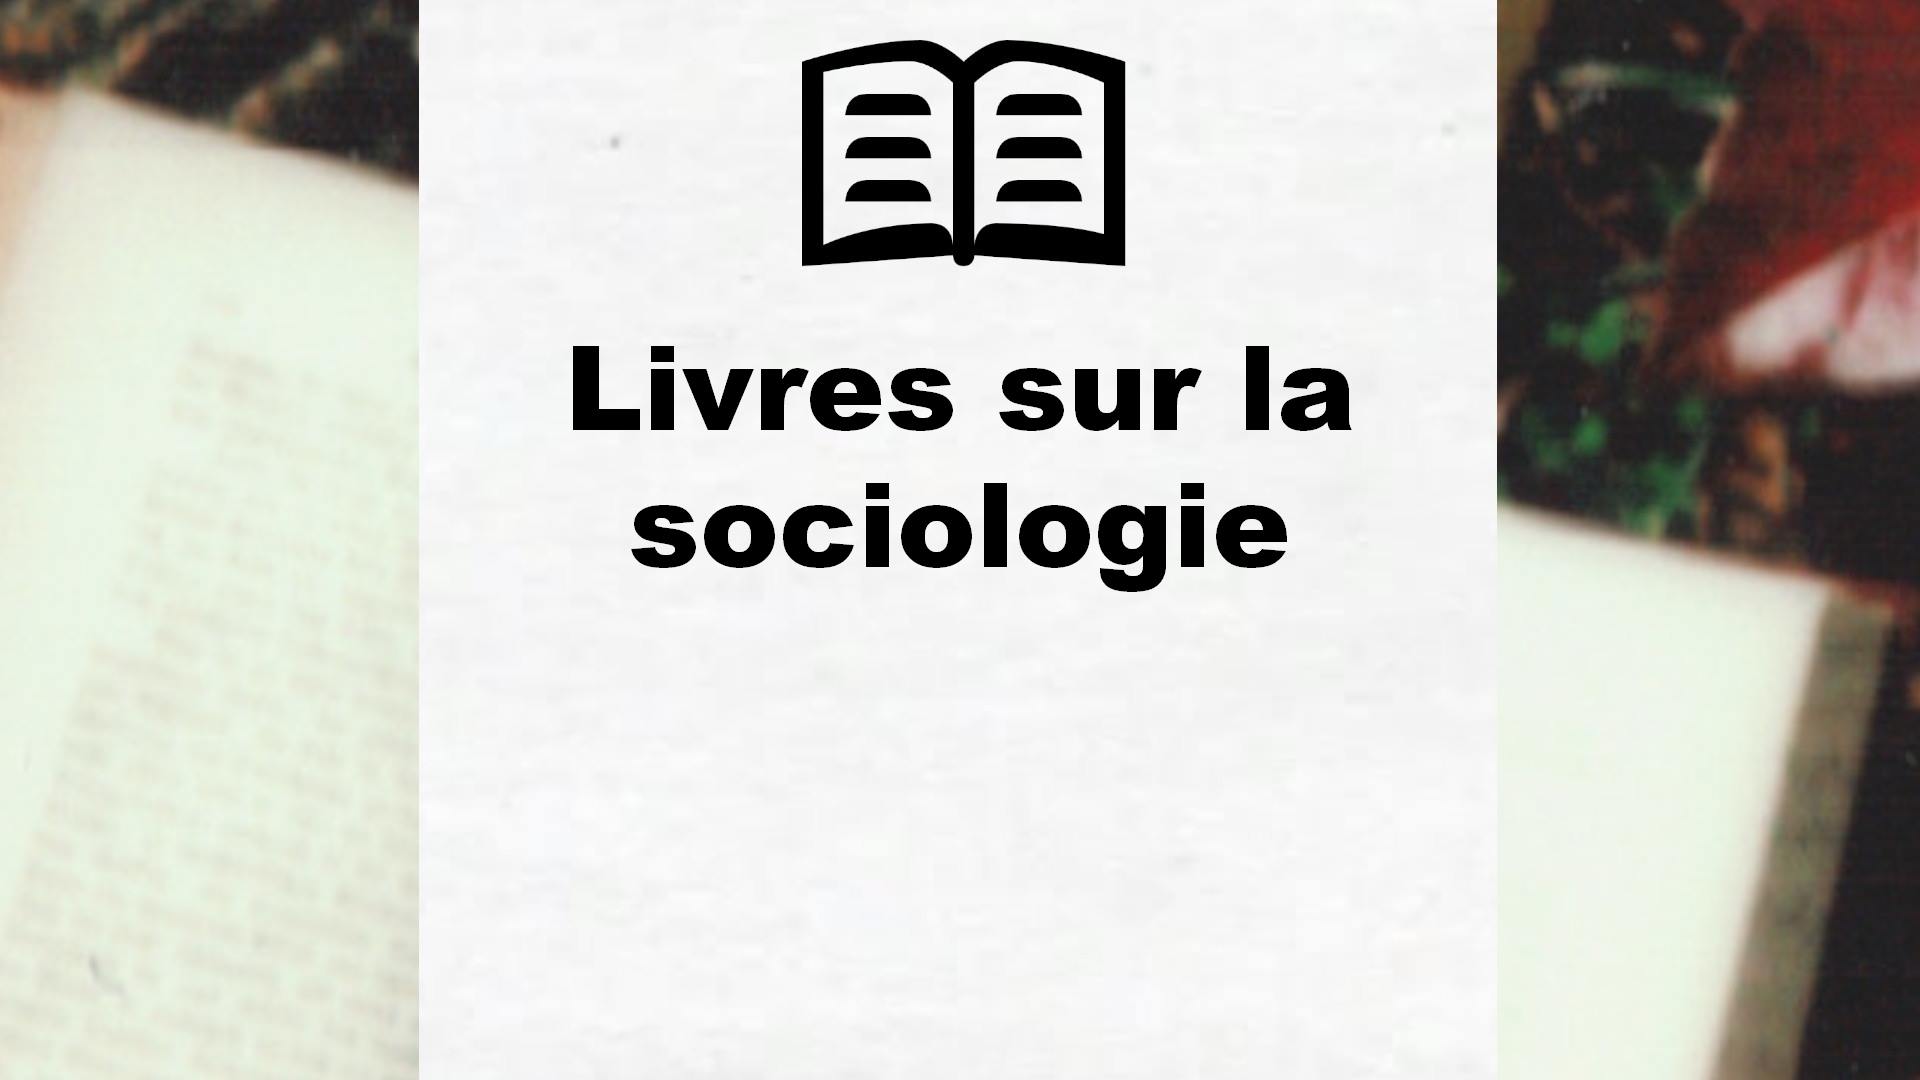 Livres sur la sociologie